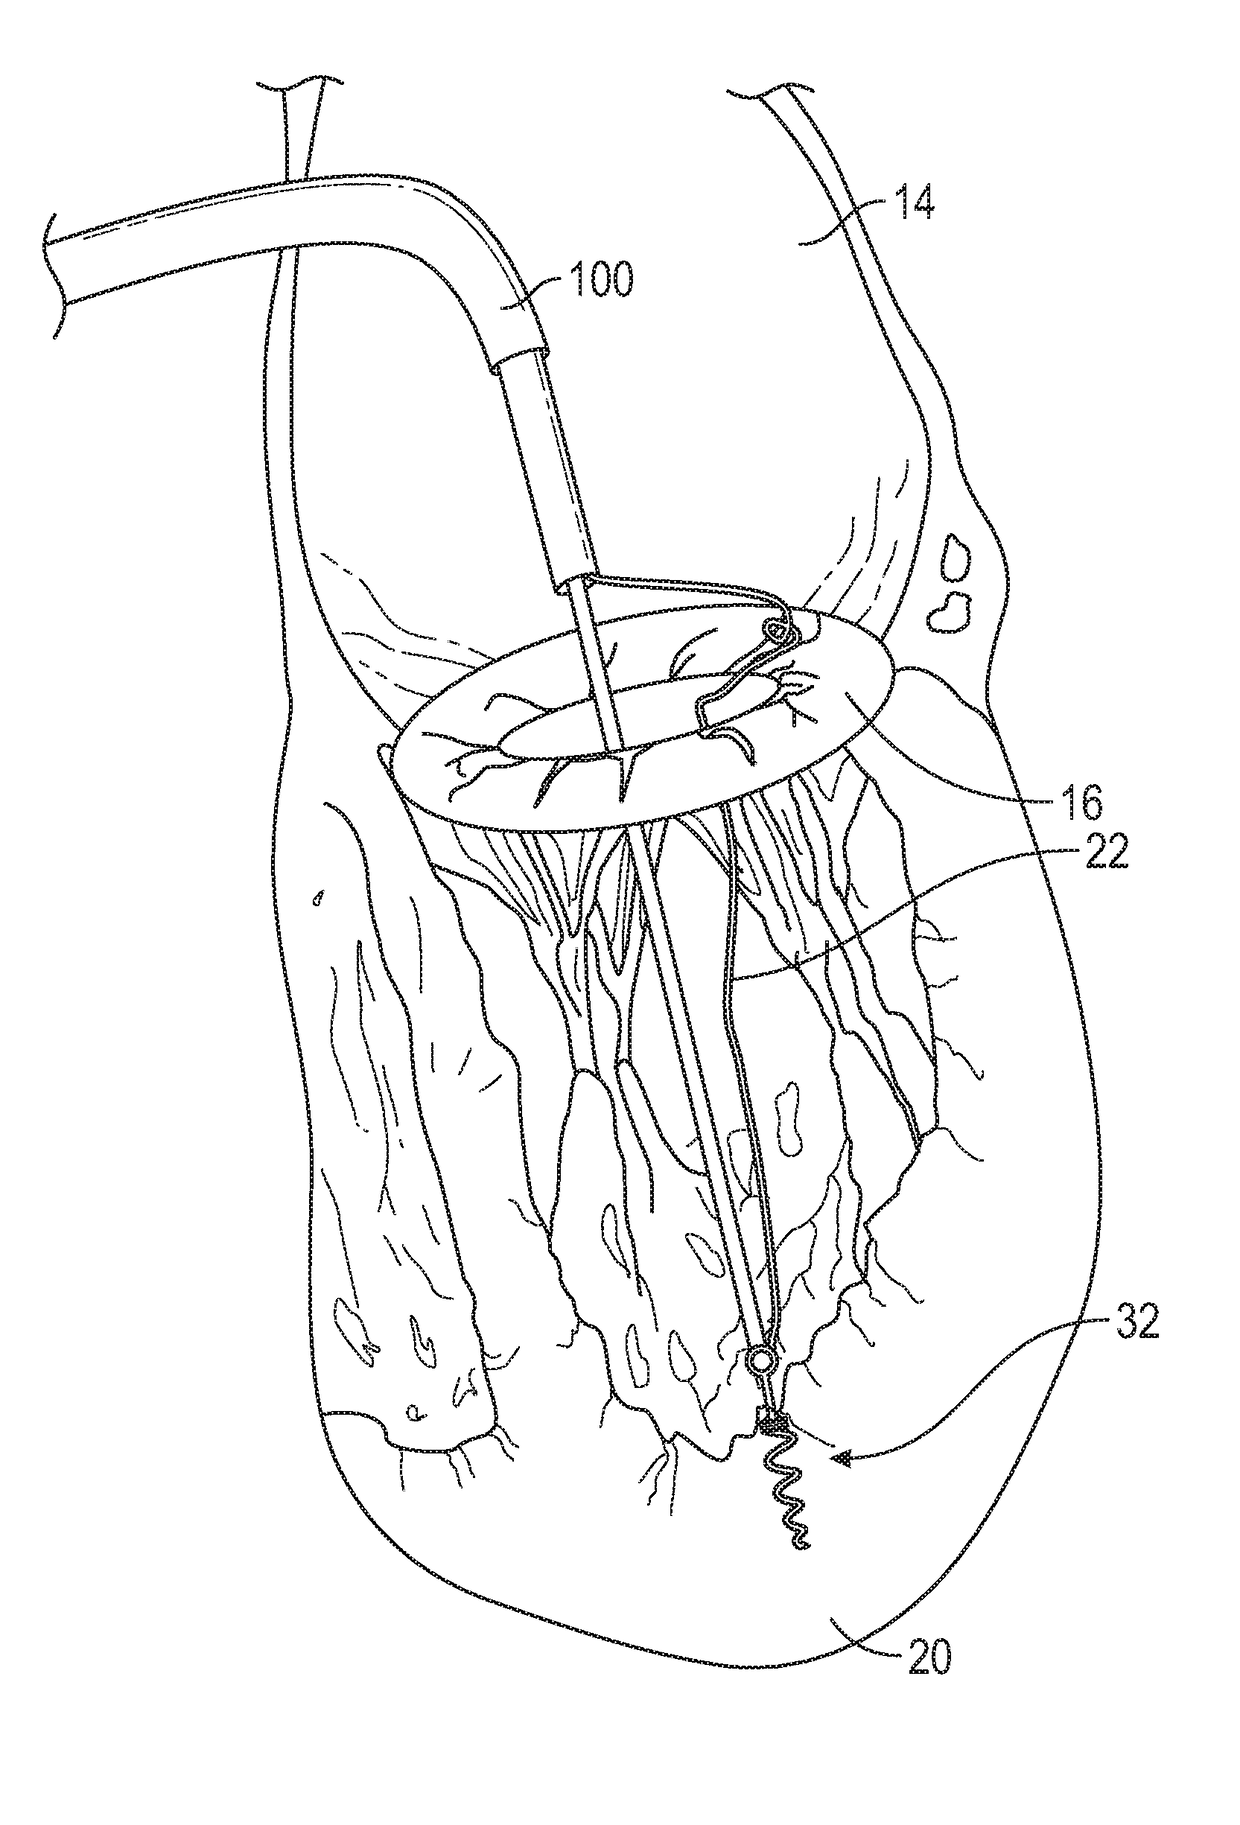 Apparatus for transvascular implantation of neo chordae tendinae